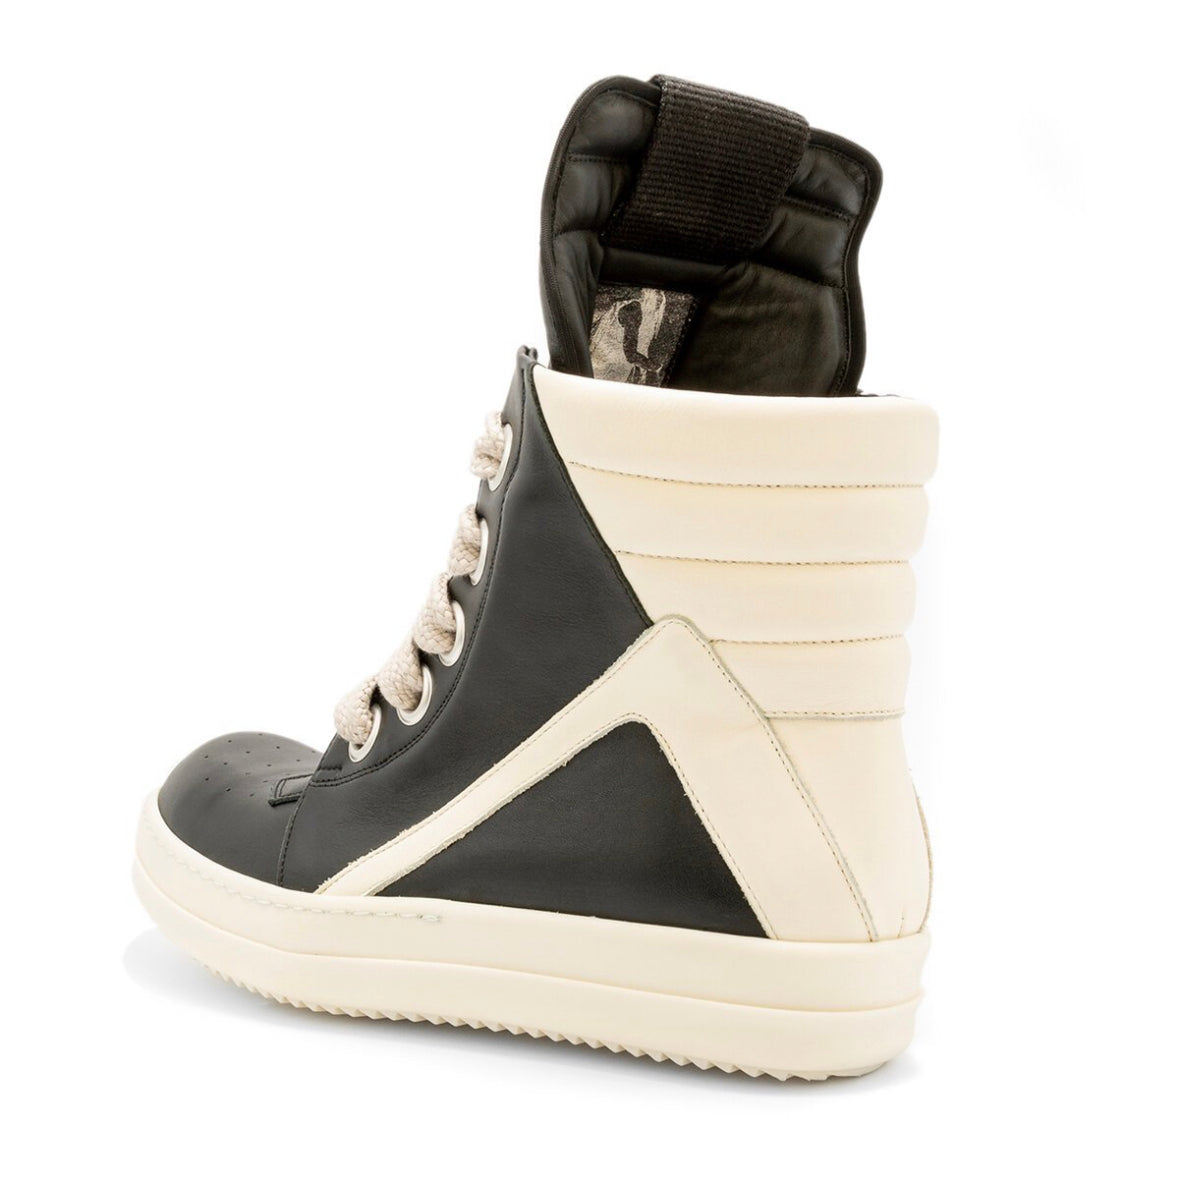 RICK OWENS Geobasket High-Top Leather Sneakers